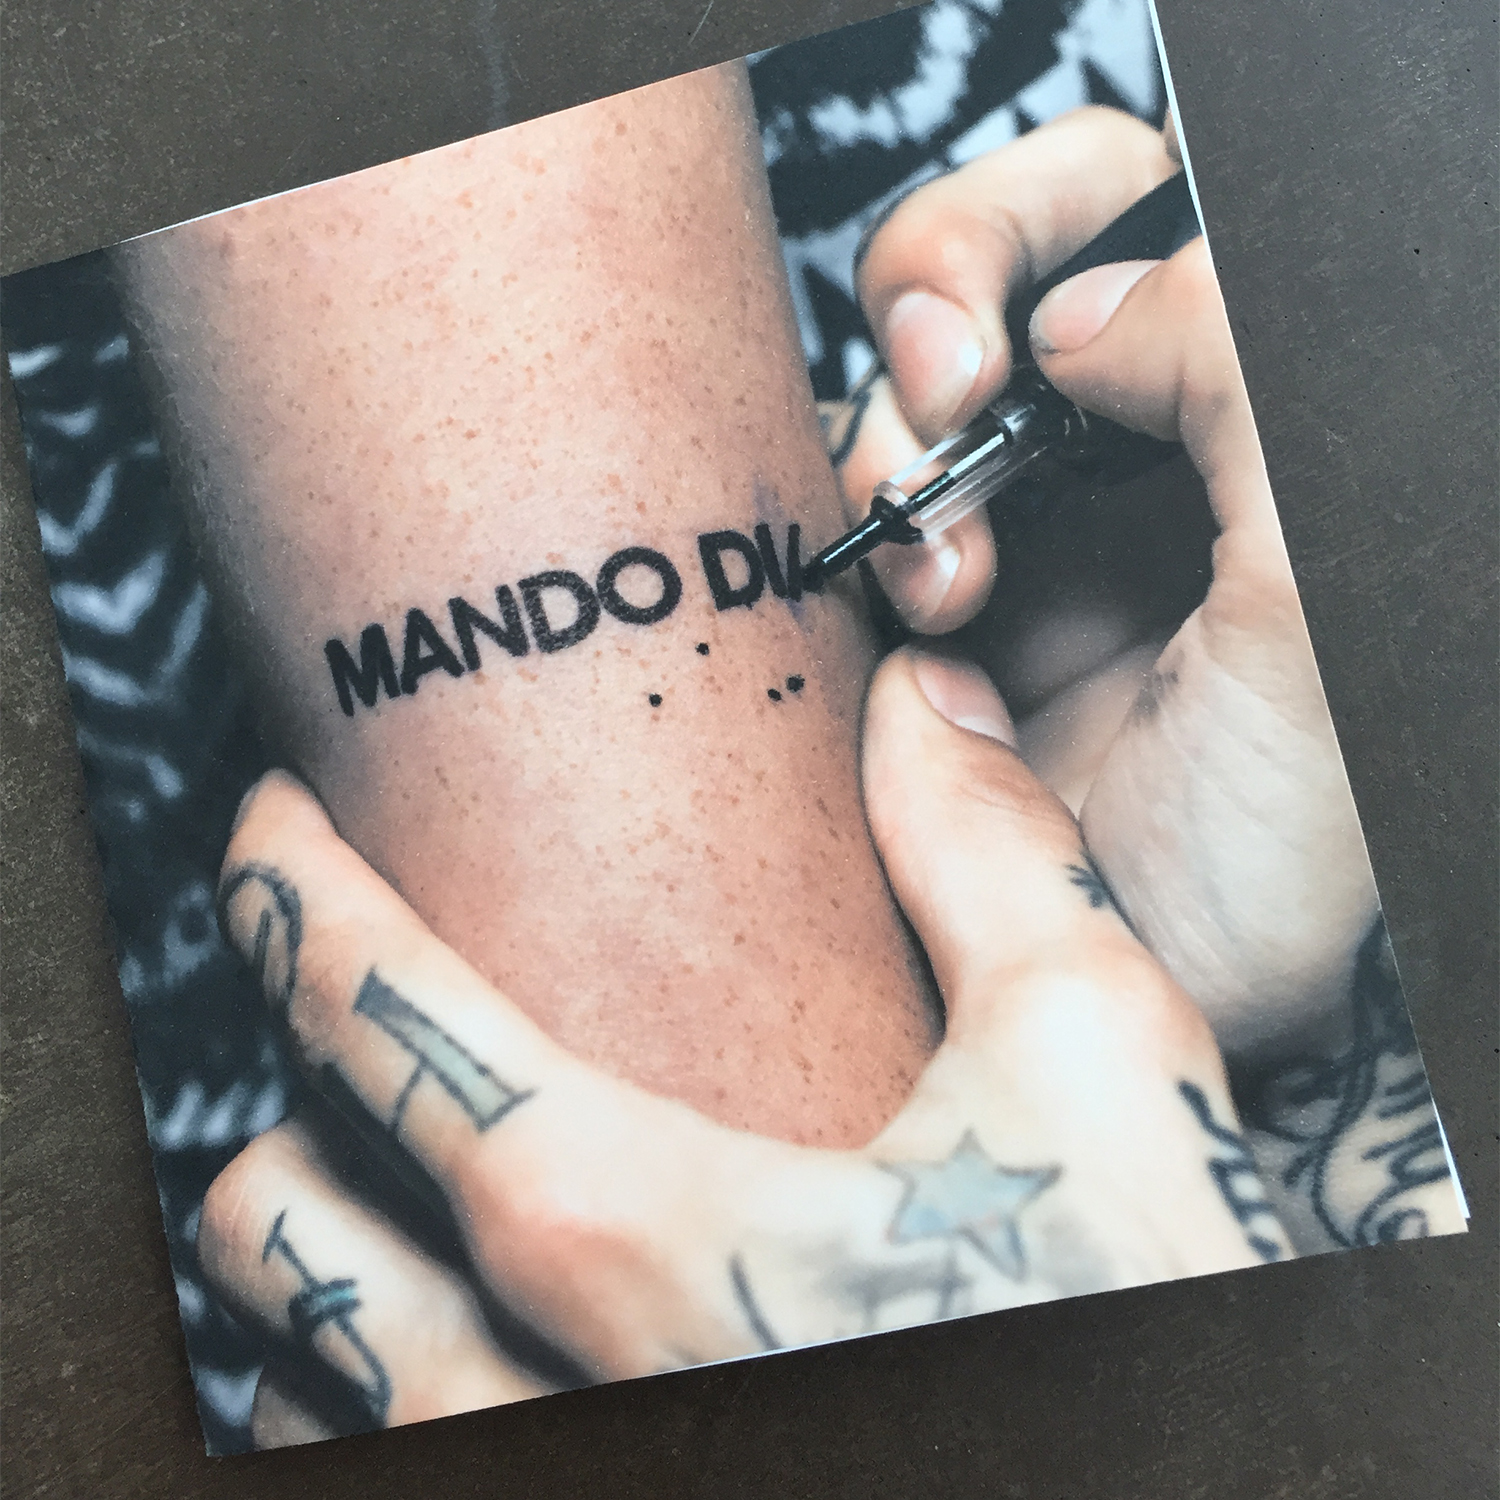 MandoDiao tattoos